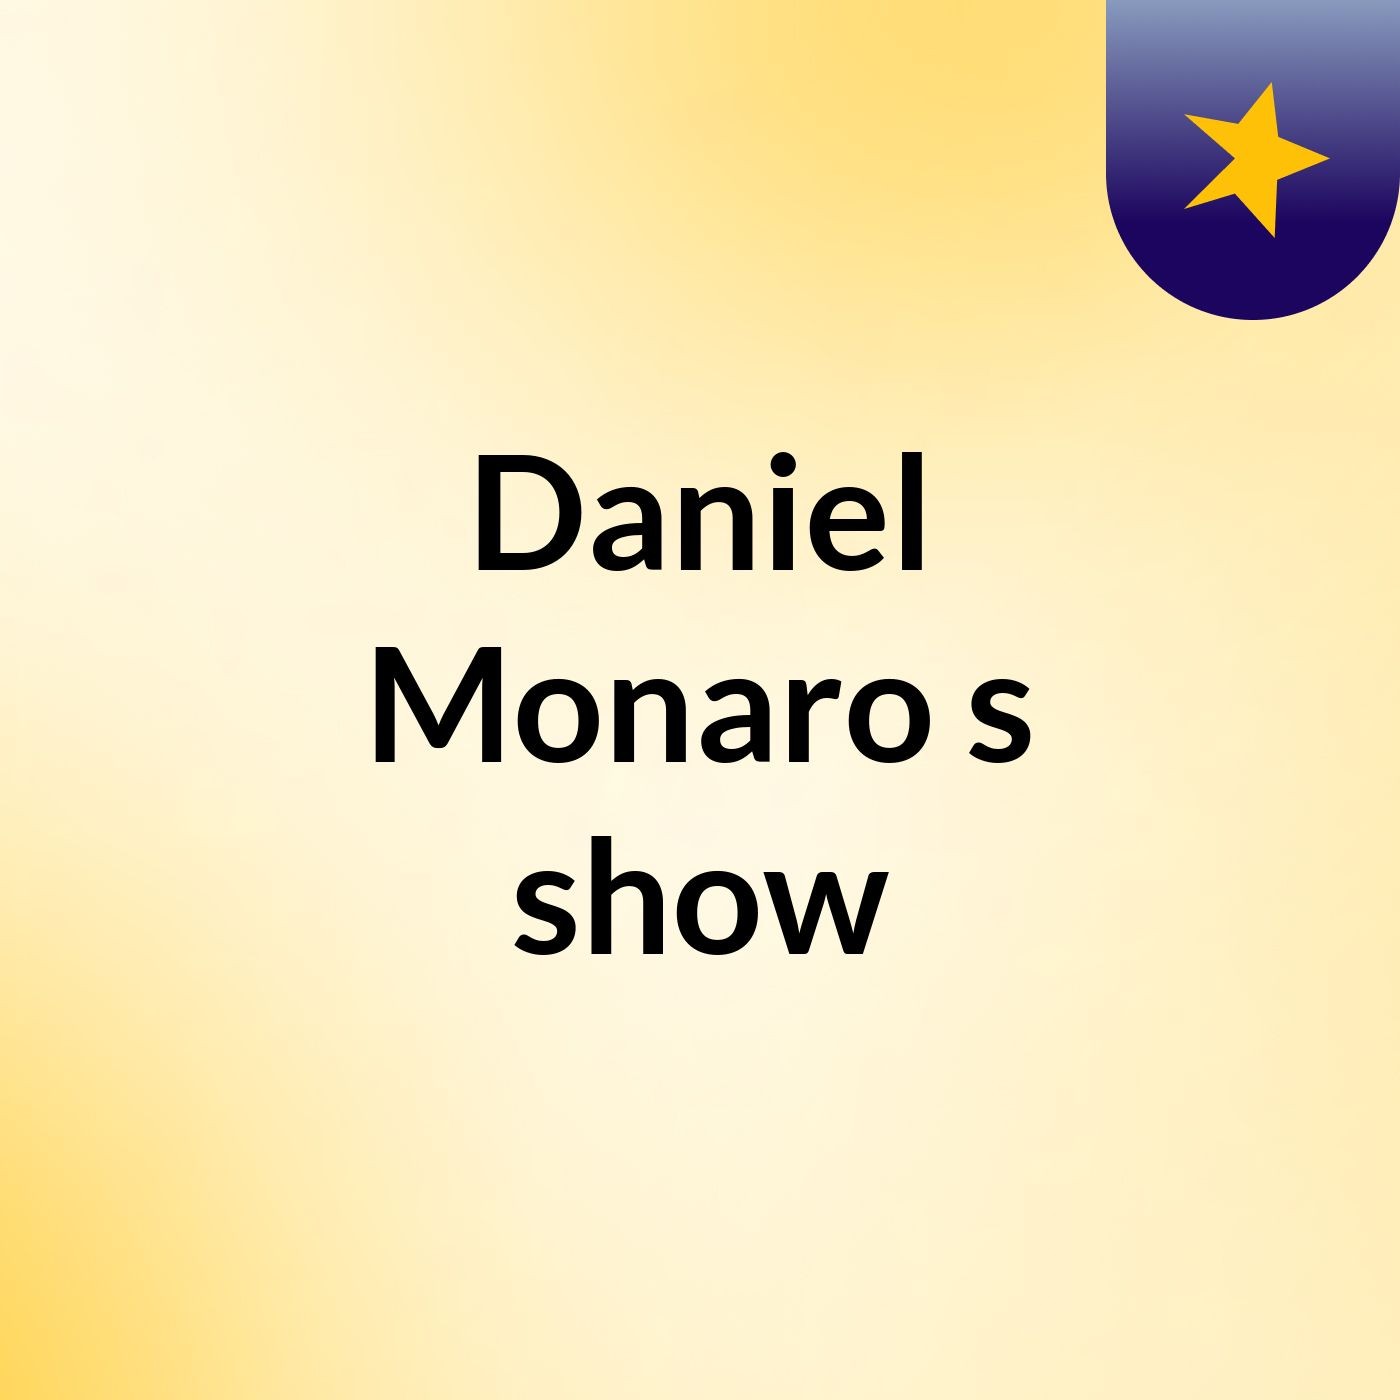 Daniel Monaro's show